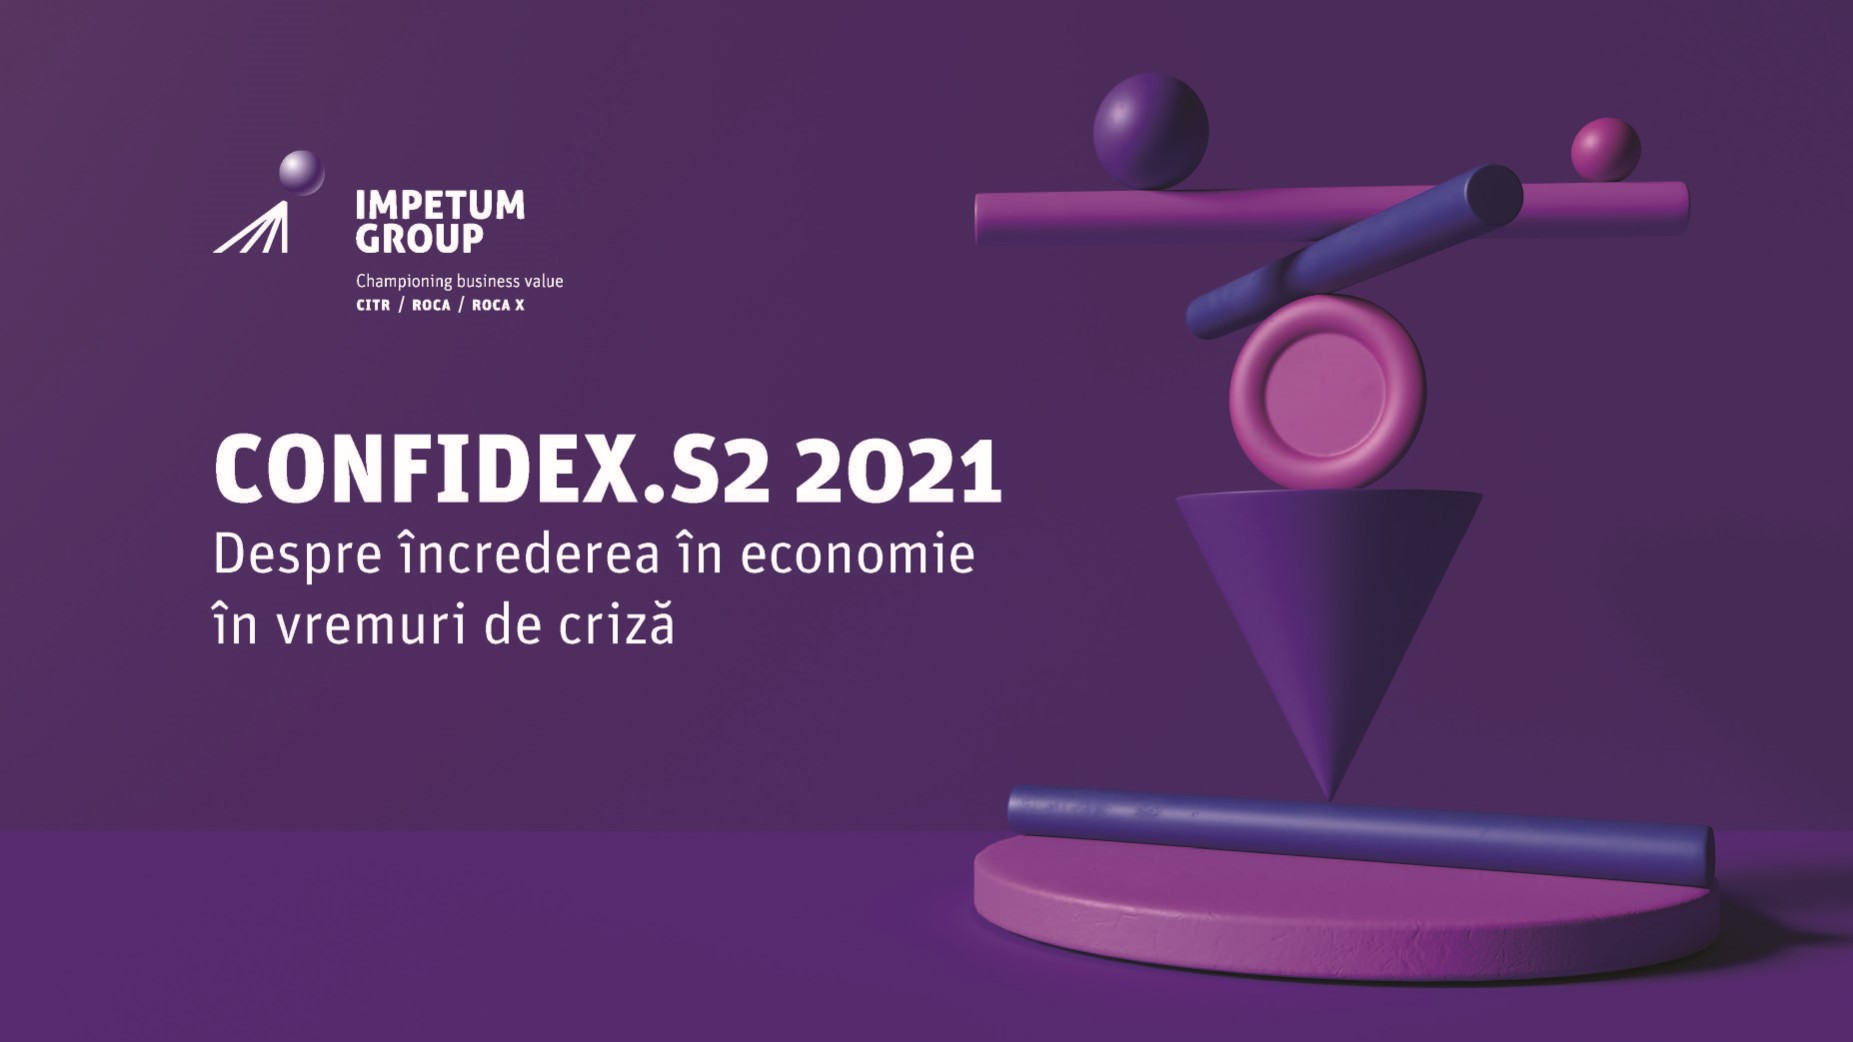 Studiul CONFIDEX S2 2021 by Impetum Group